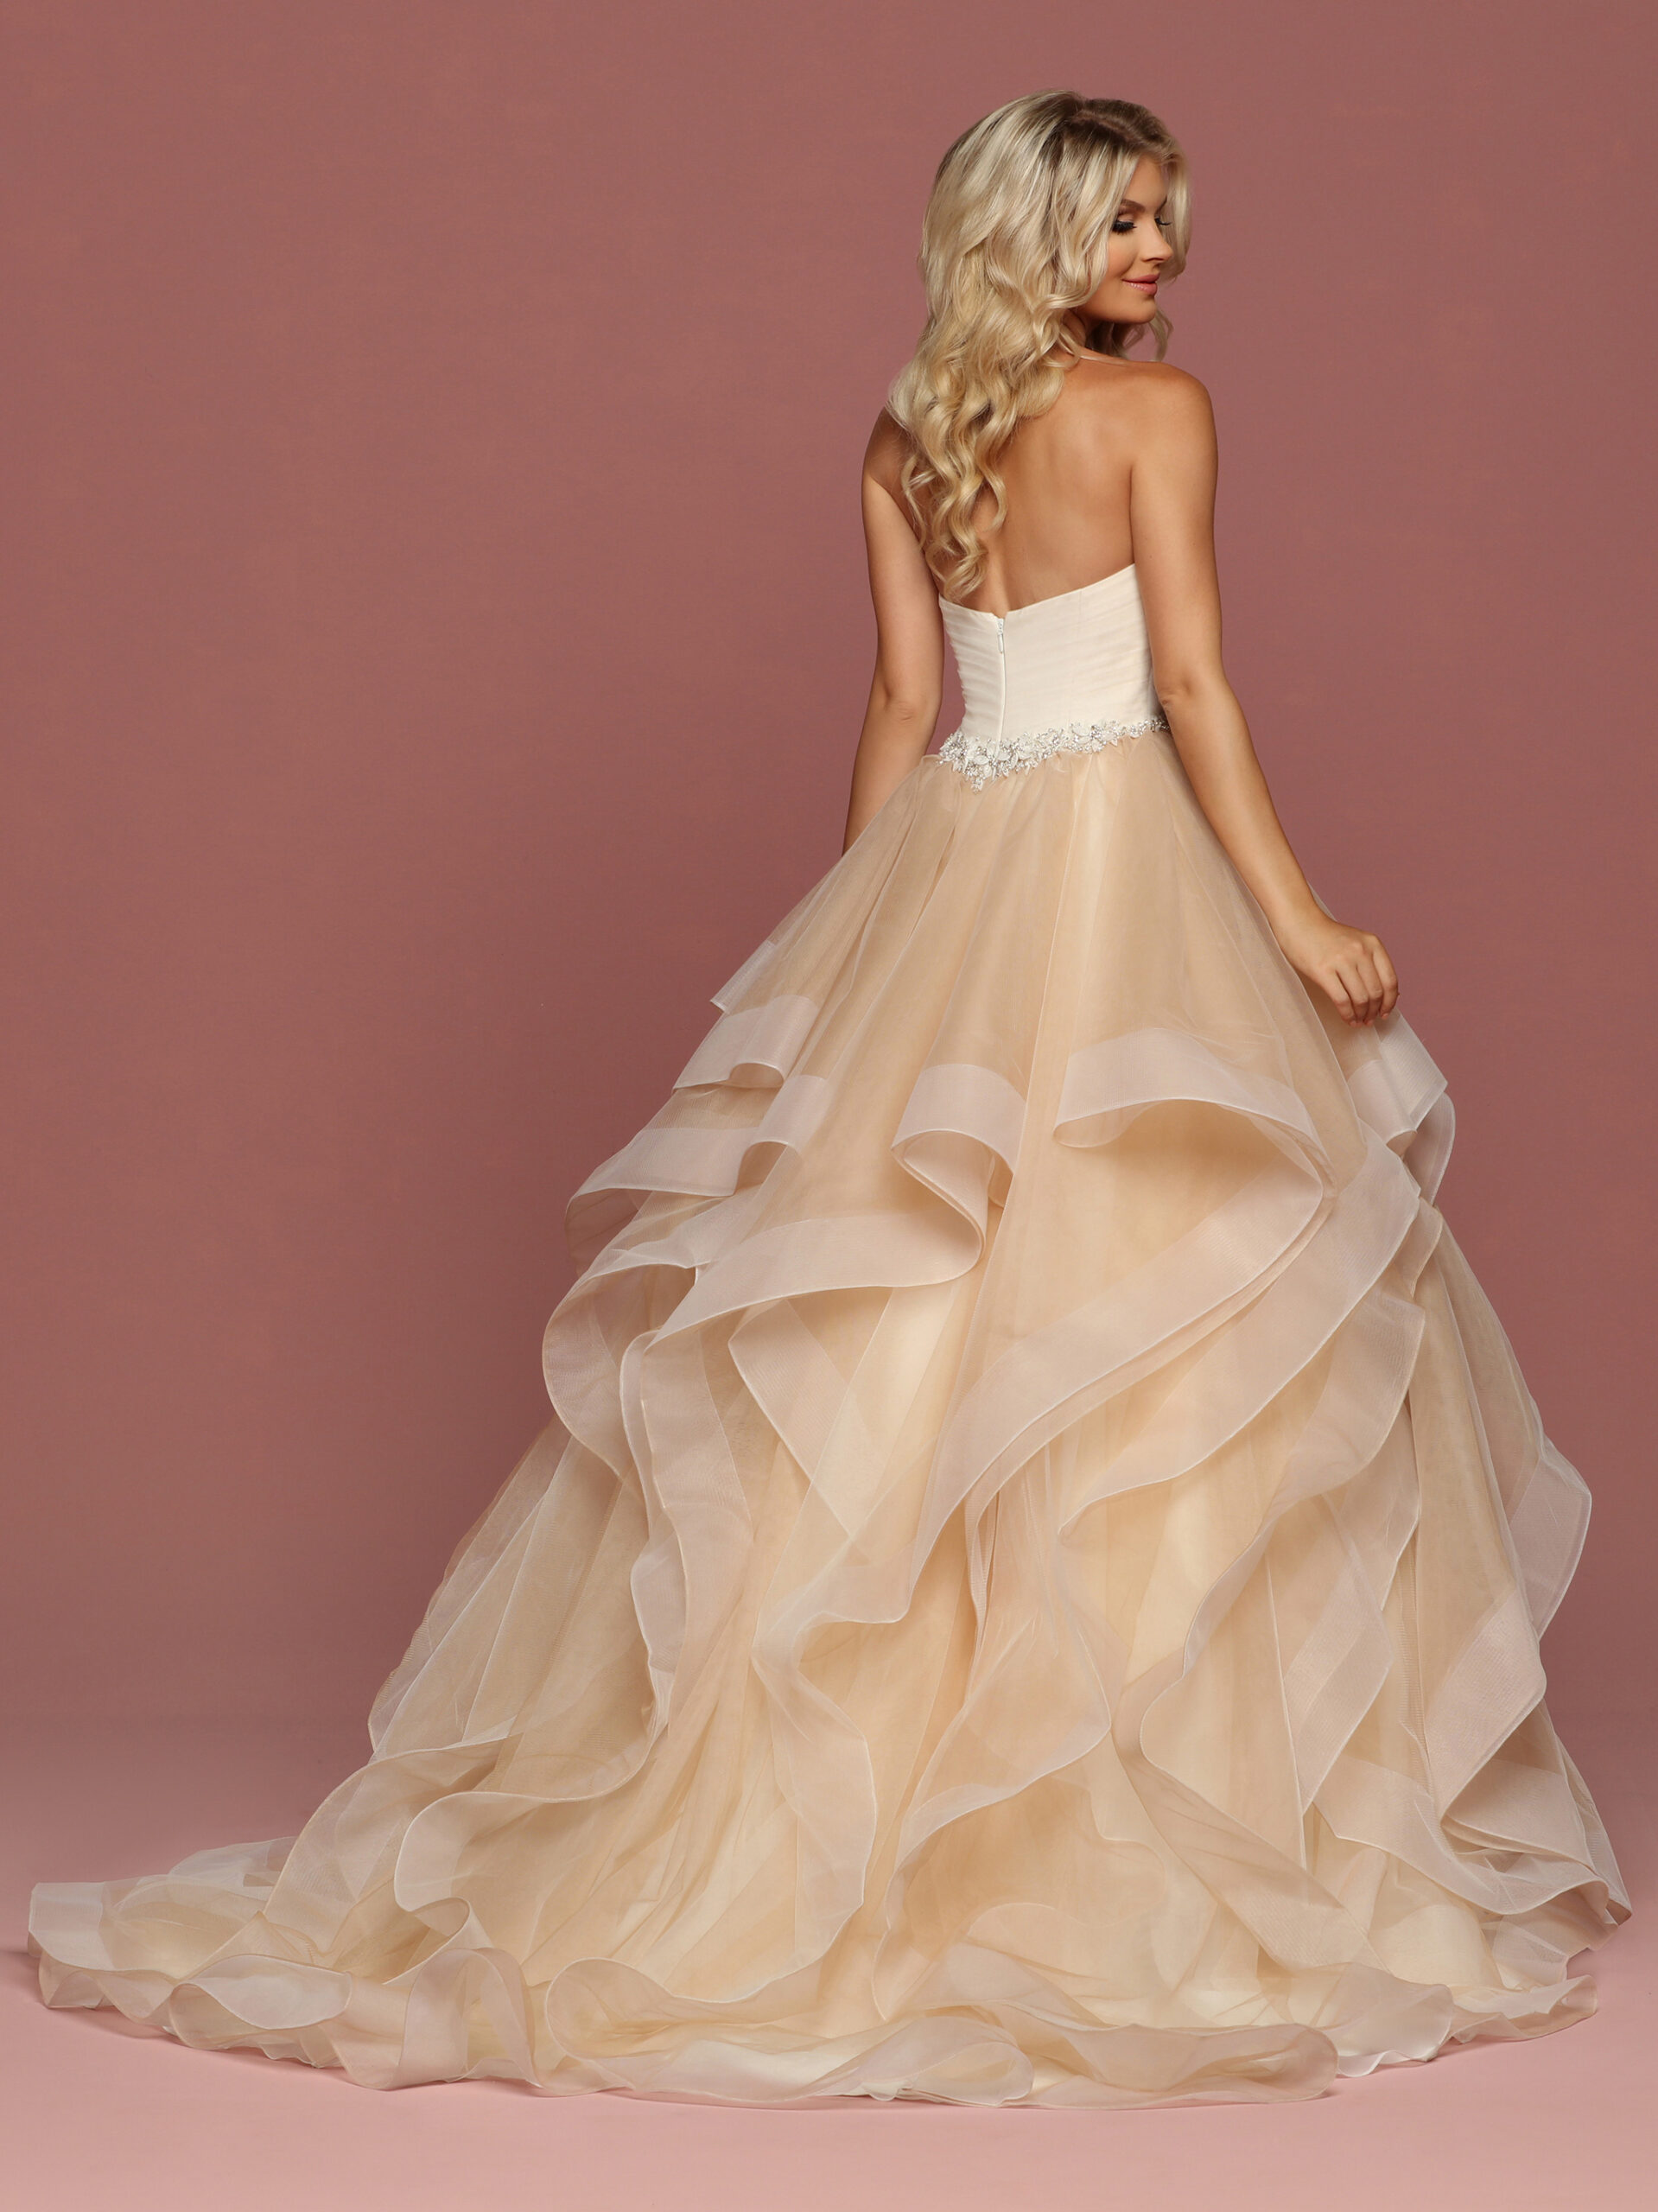 davinci-bridal-gown-10-scaled.jpg